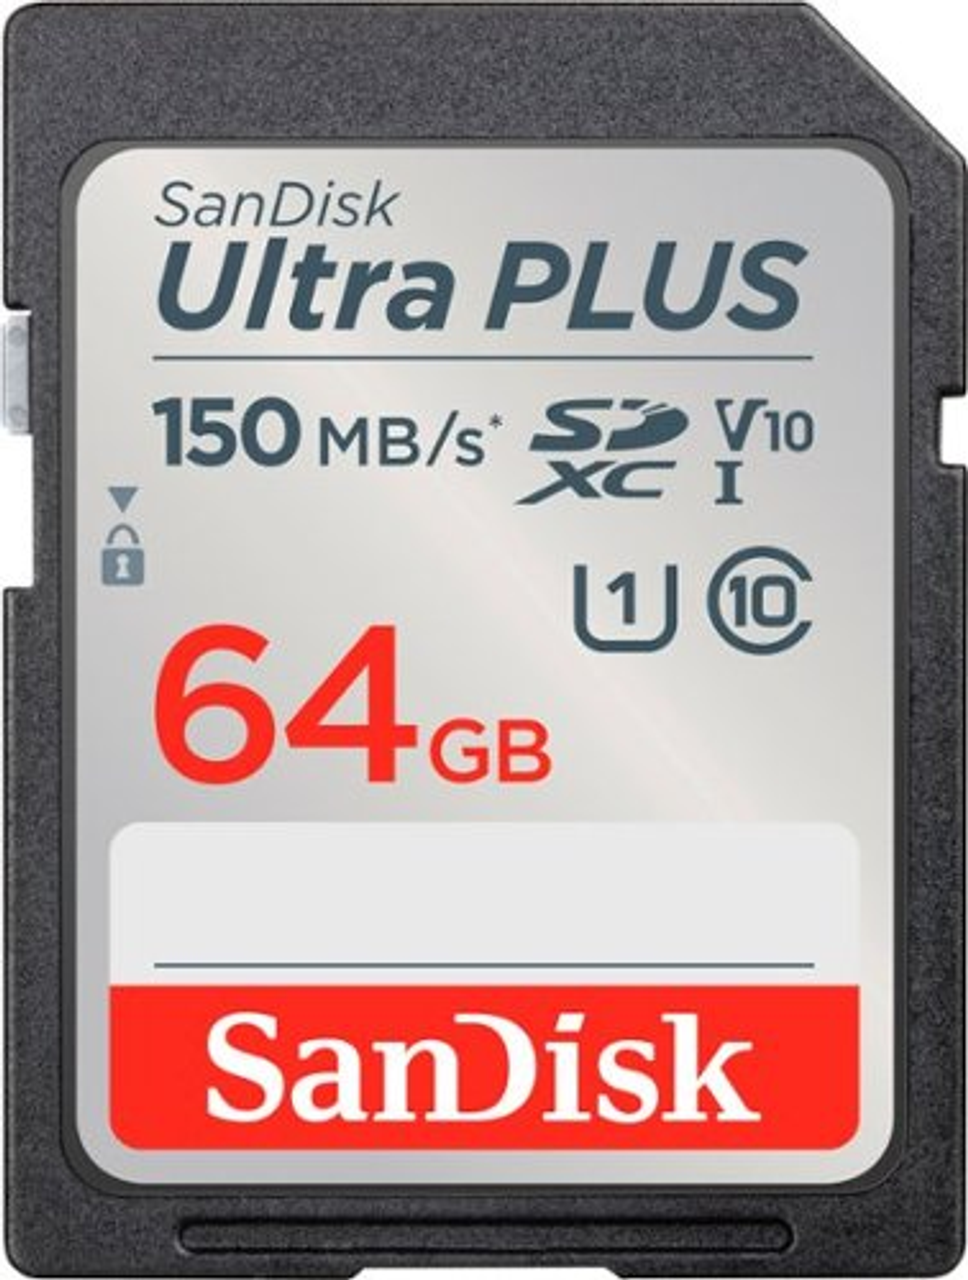 SanDisk - Ultra PLUS 64GB SDXC UHS-I Memory Card